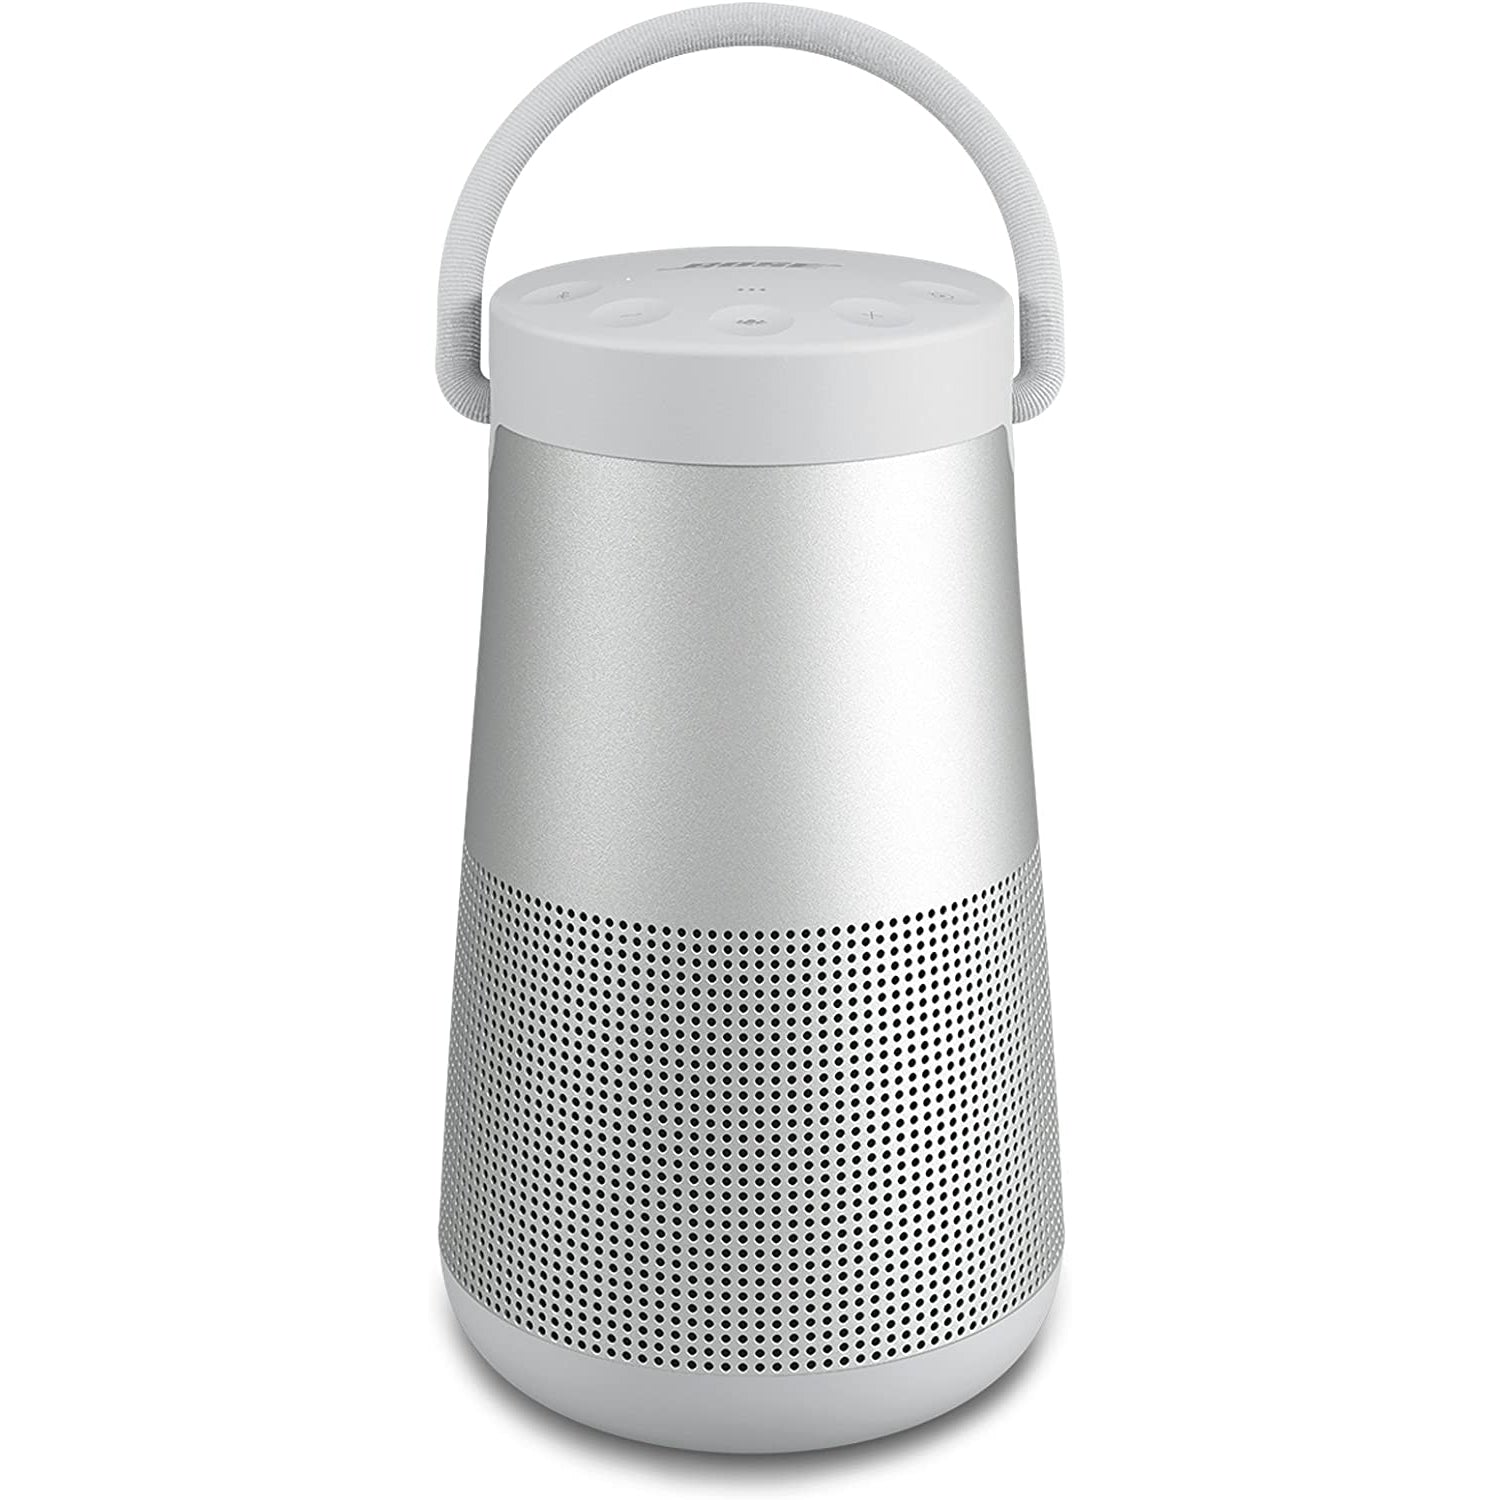 Bose SoundLink Revolve+ Portable Bluetooth Speaker - Luxe Silver - Refurbished Good